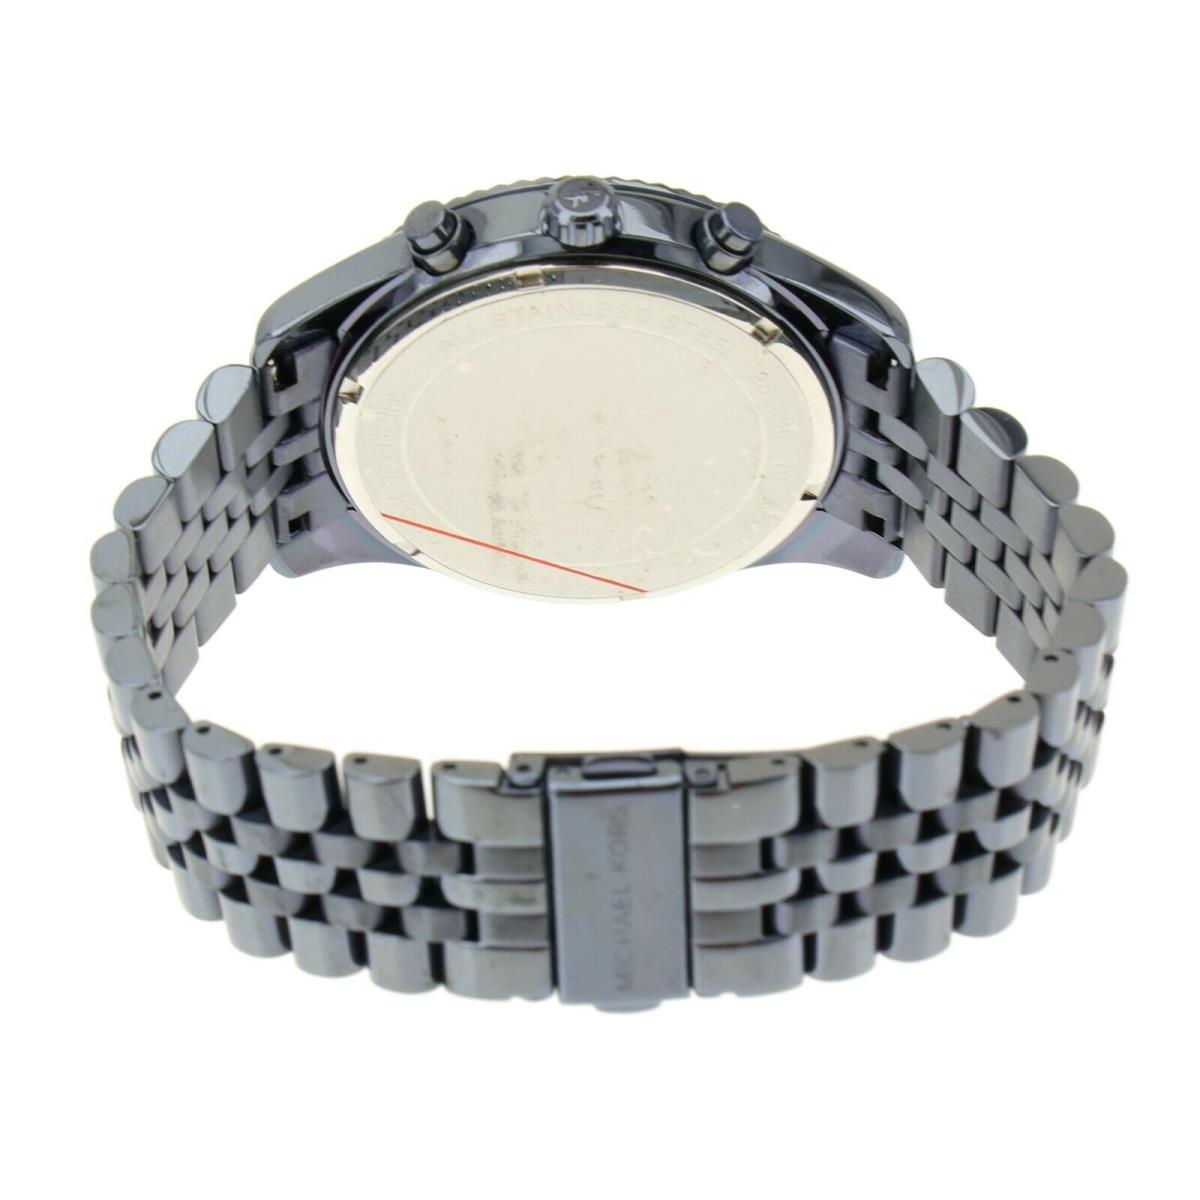 Michael Kors Lexington Men`s Navy Chronograph Bracelet Watch 1516 - Dial: Navy, Band: Navy